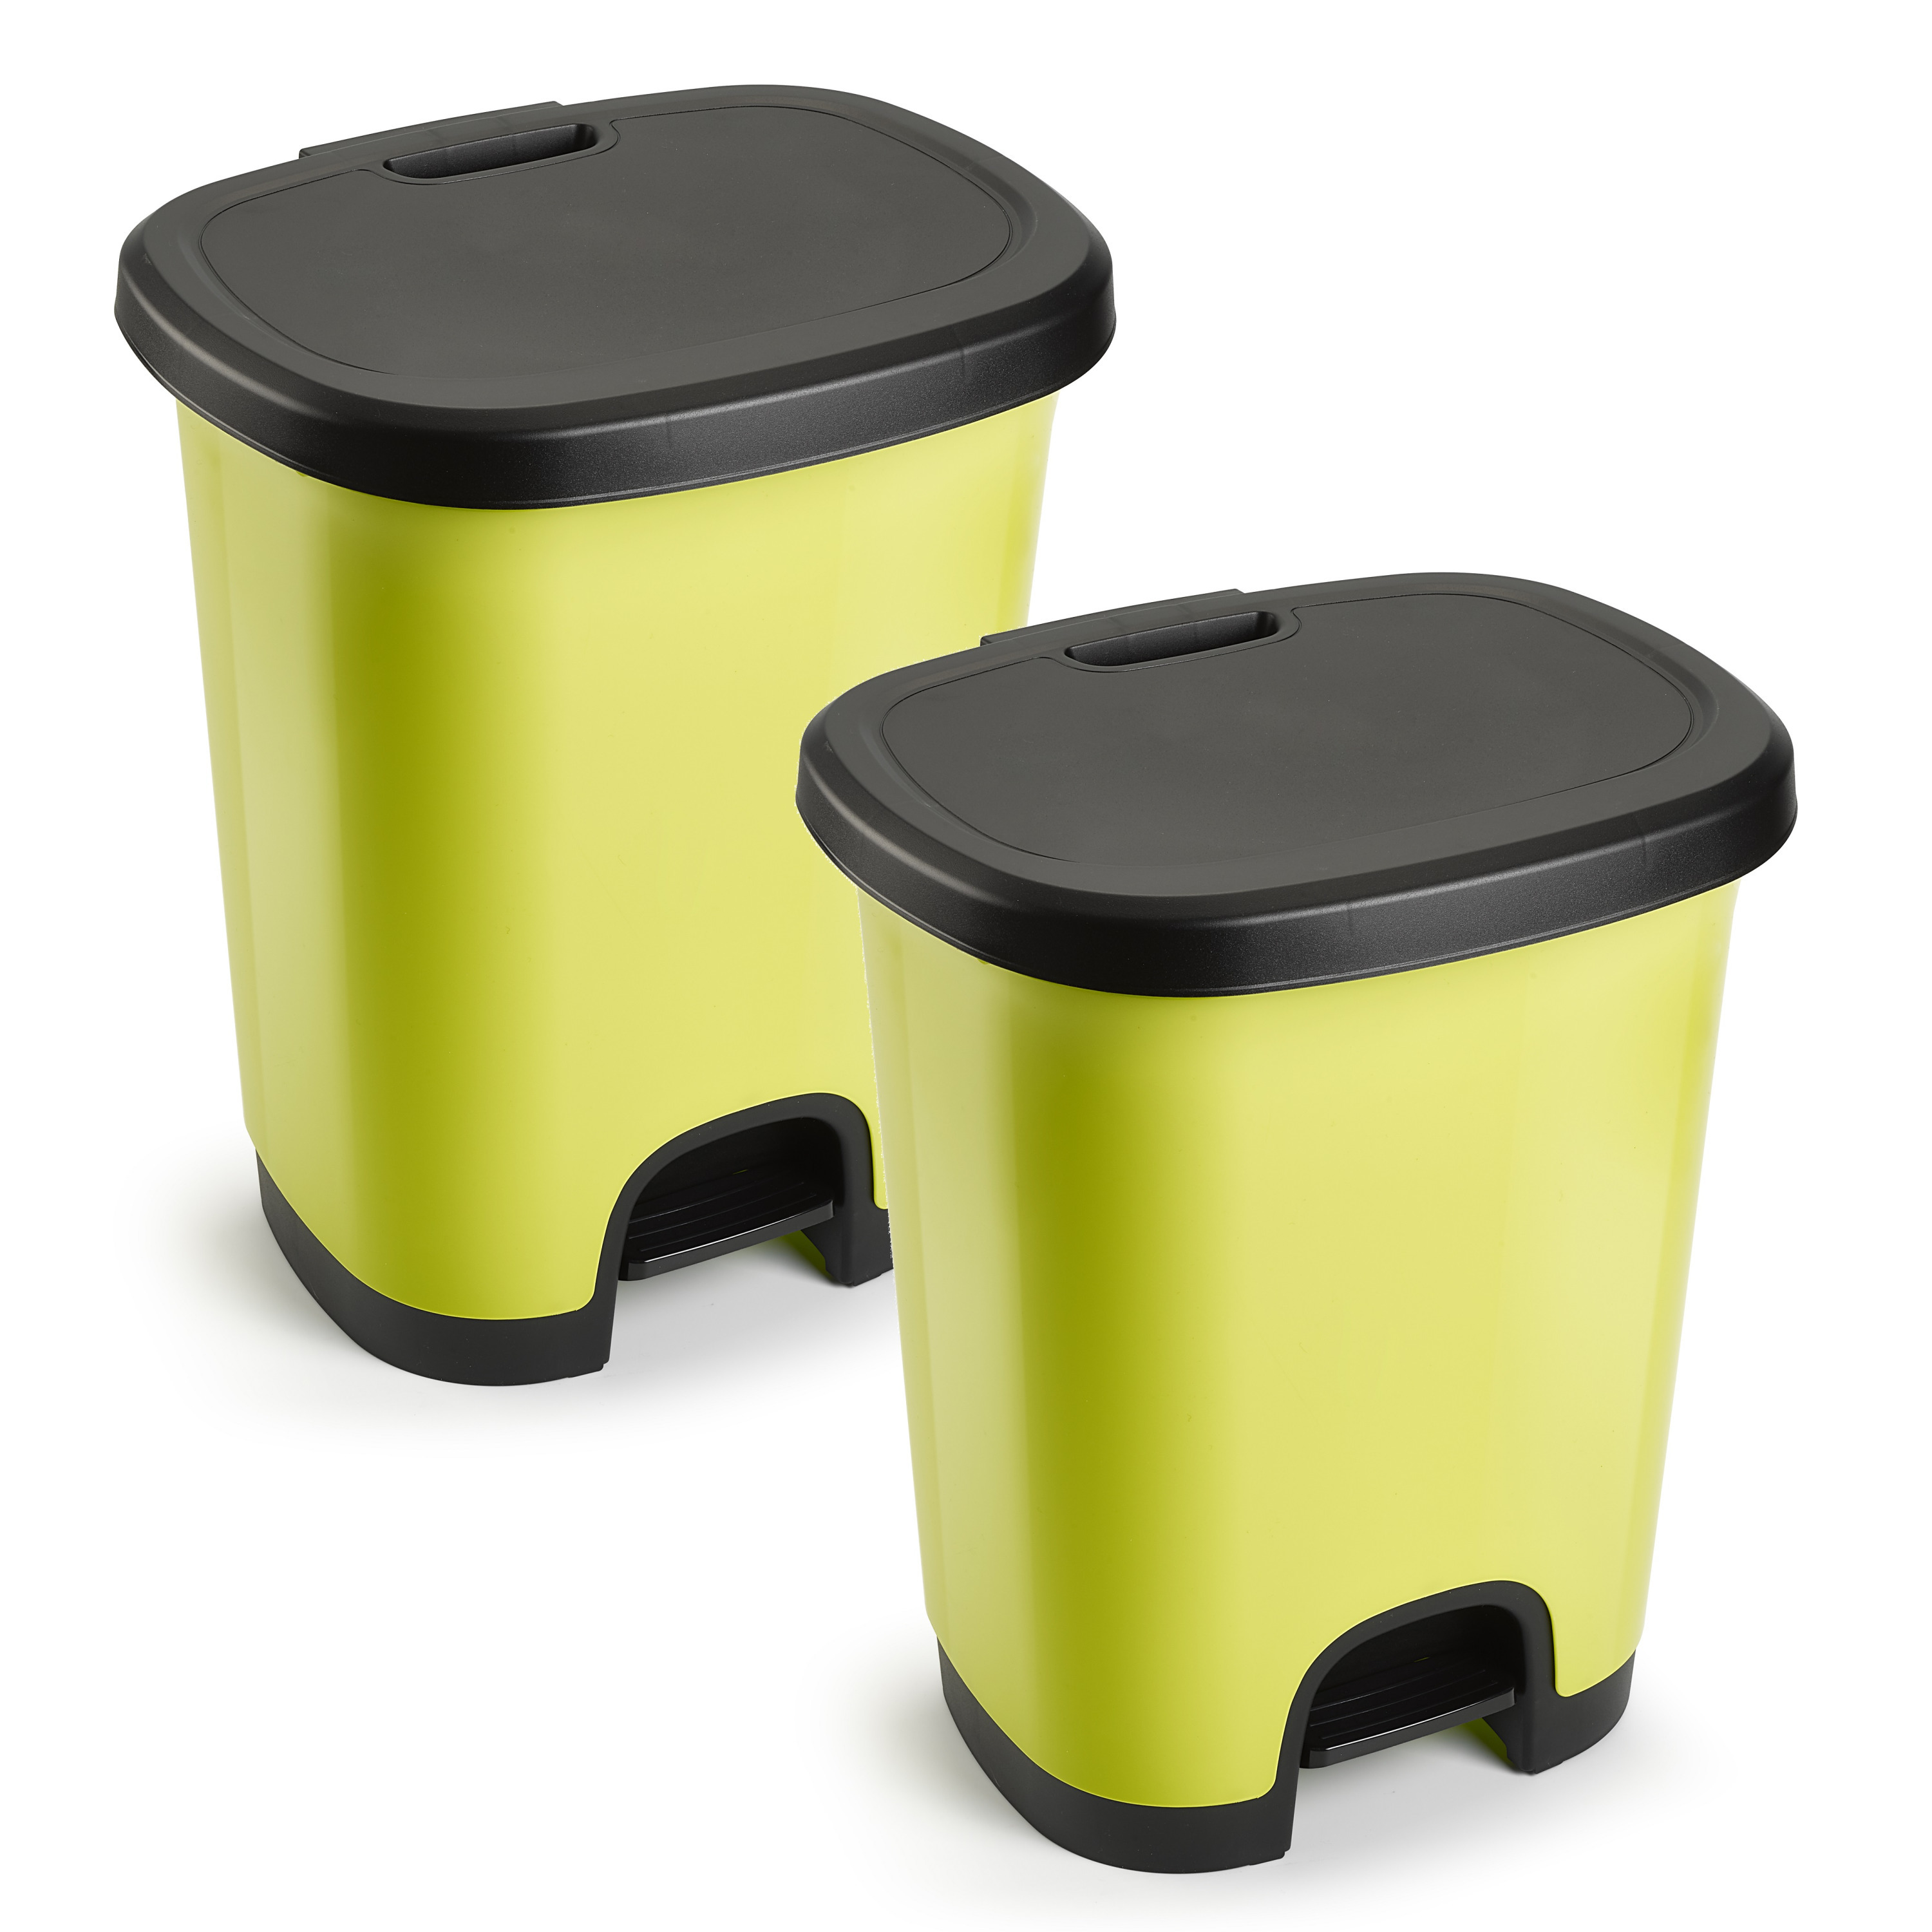 2x Stuks afvalemmer-vuilnisemmer-pedaalemmer 27 liter in het kiwi groen-zwart met deksel en pedaal